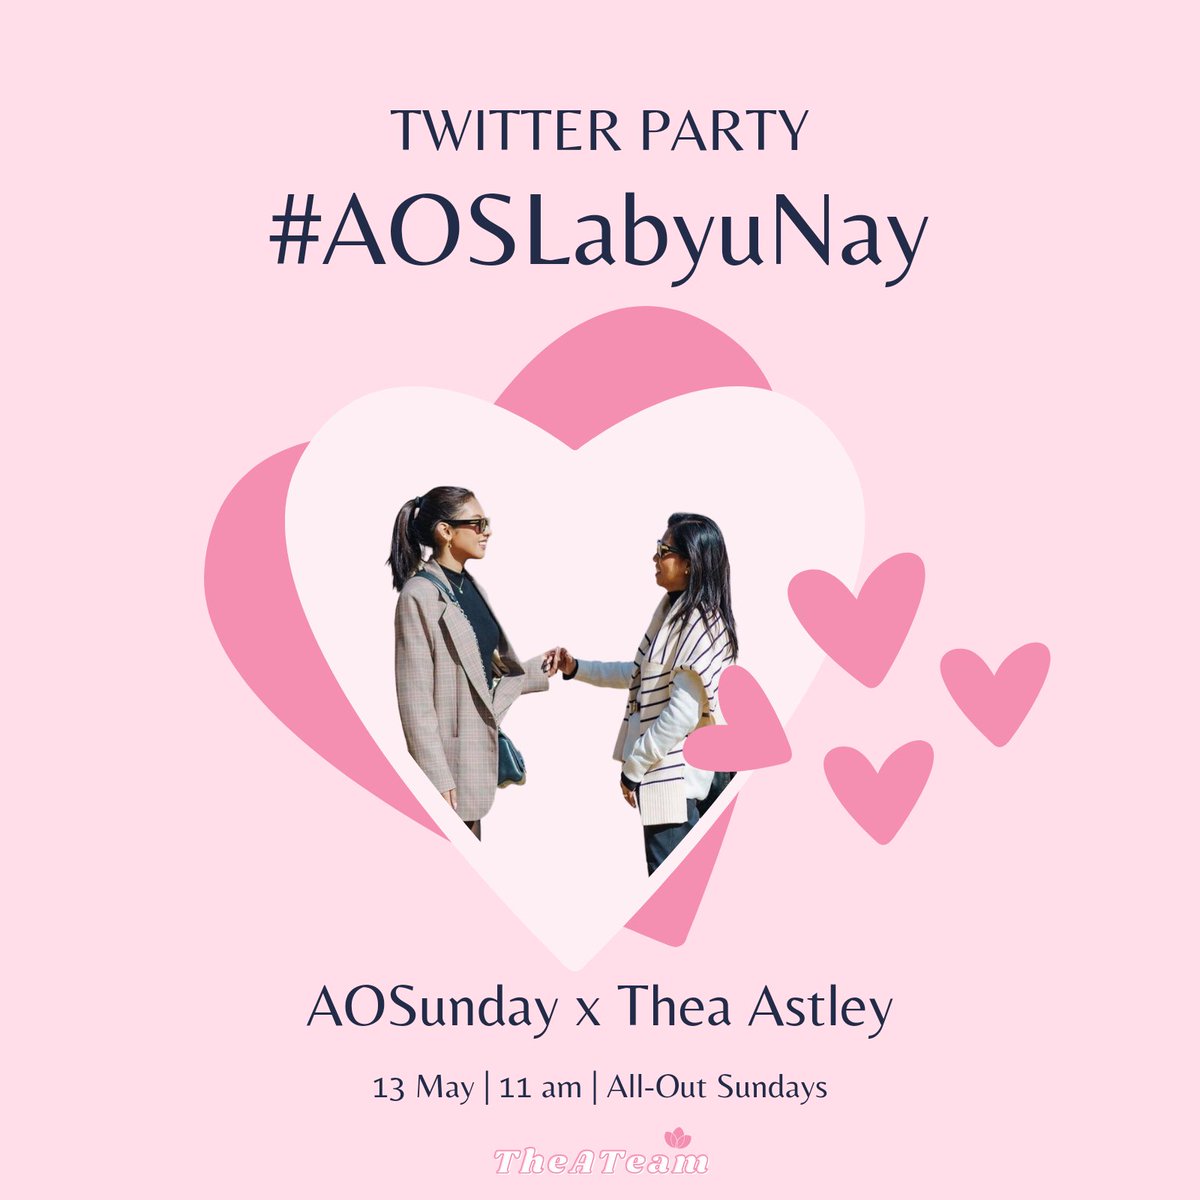 Celebrate Mother's Day with us, mga ka-AyOS!

here's our tags for tomorrow:

AOSunday x Thea Astley
#AOSLabyuNay